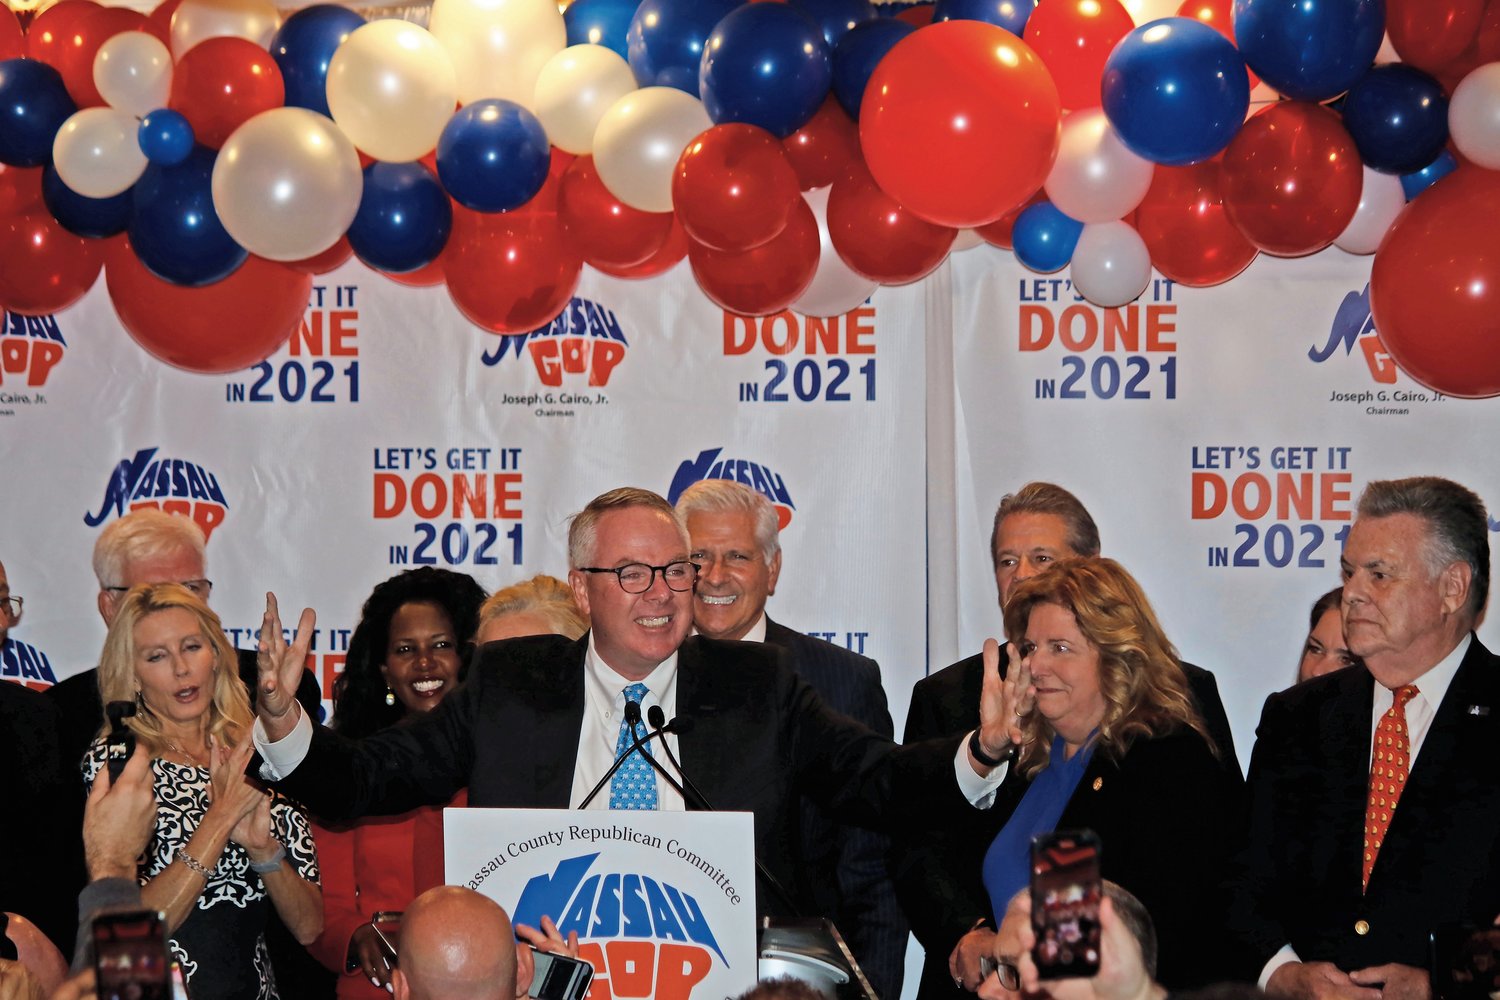 Town of Hempstead Supervisor incumbent Don Clavin won his race against Democrat challenger Jason Abelove.